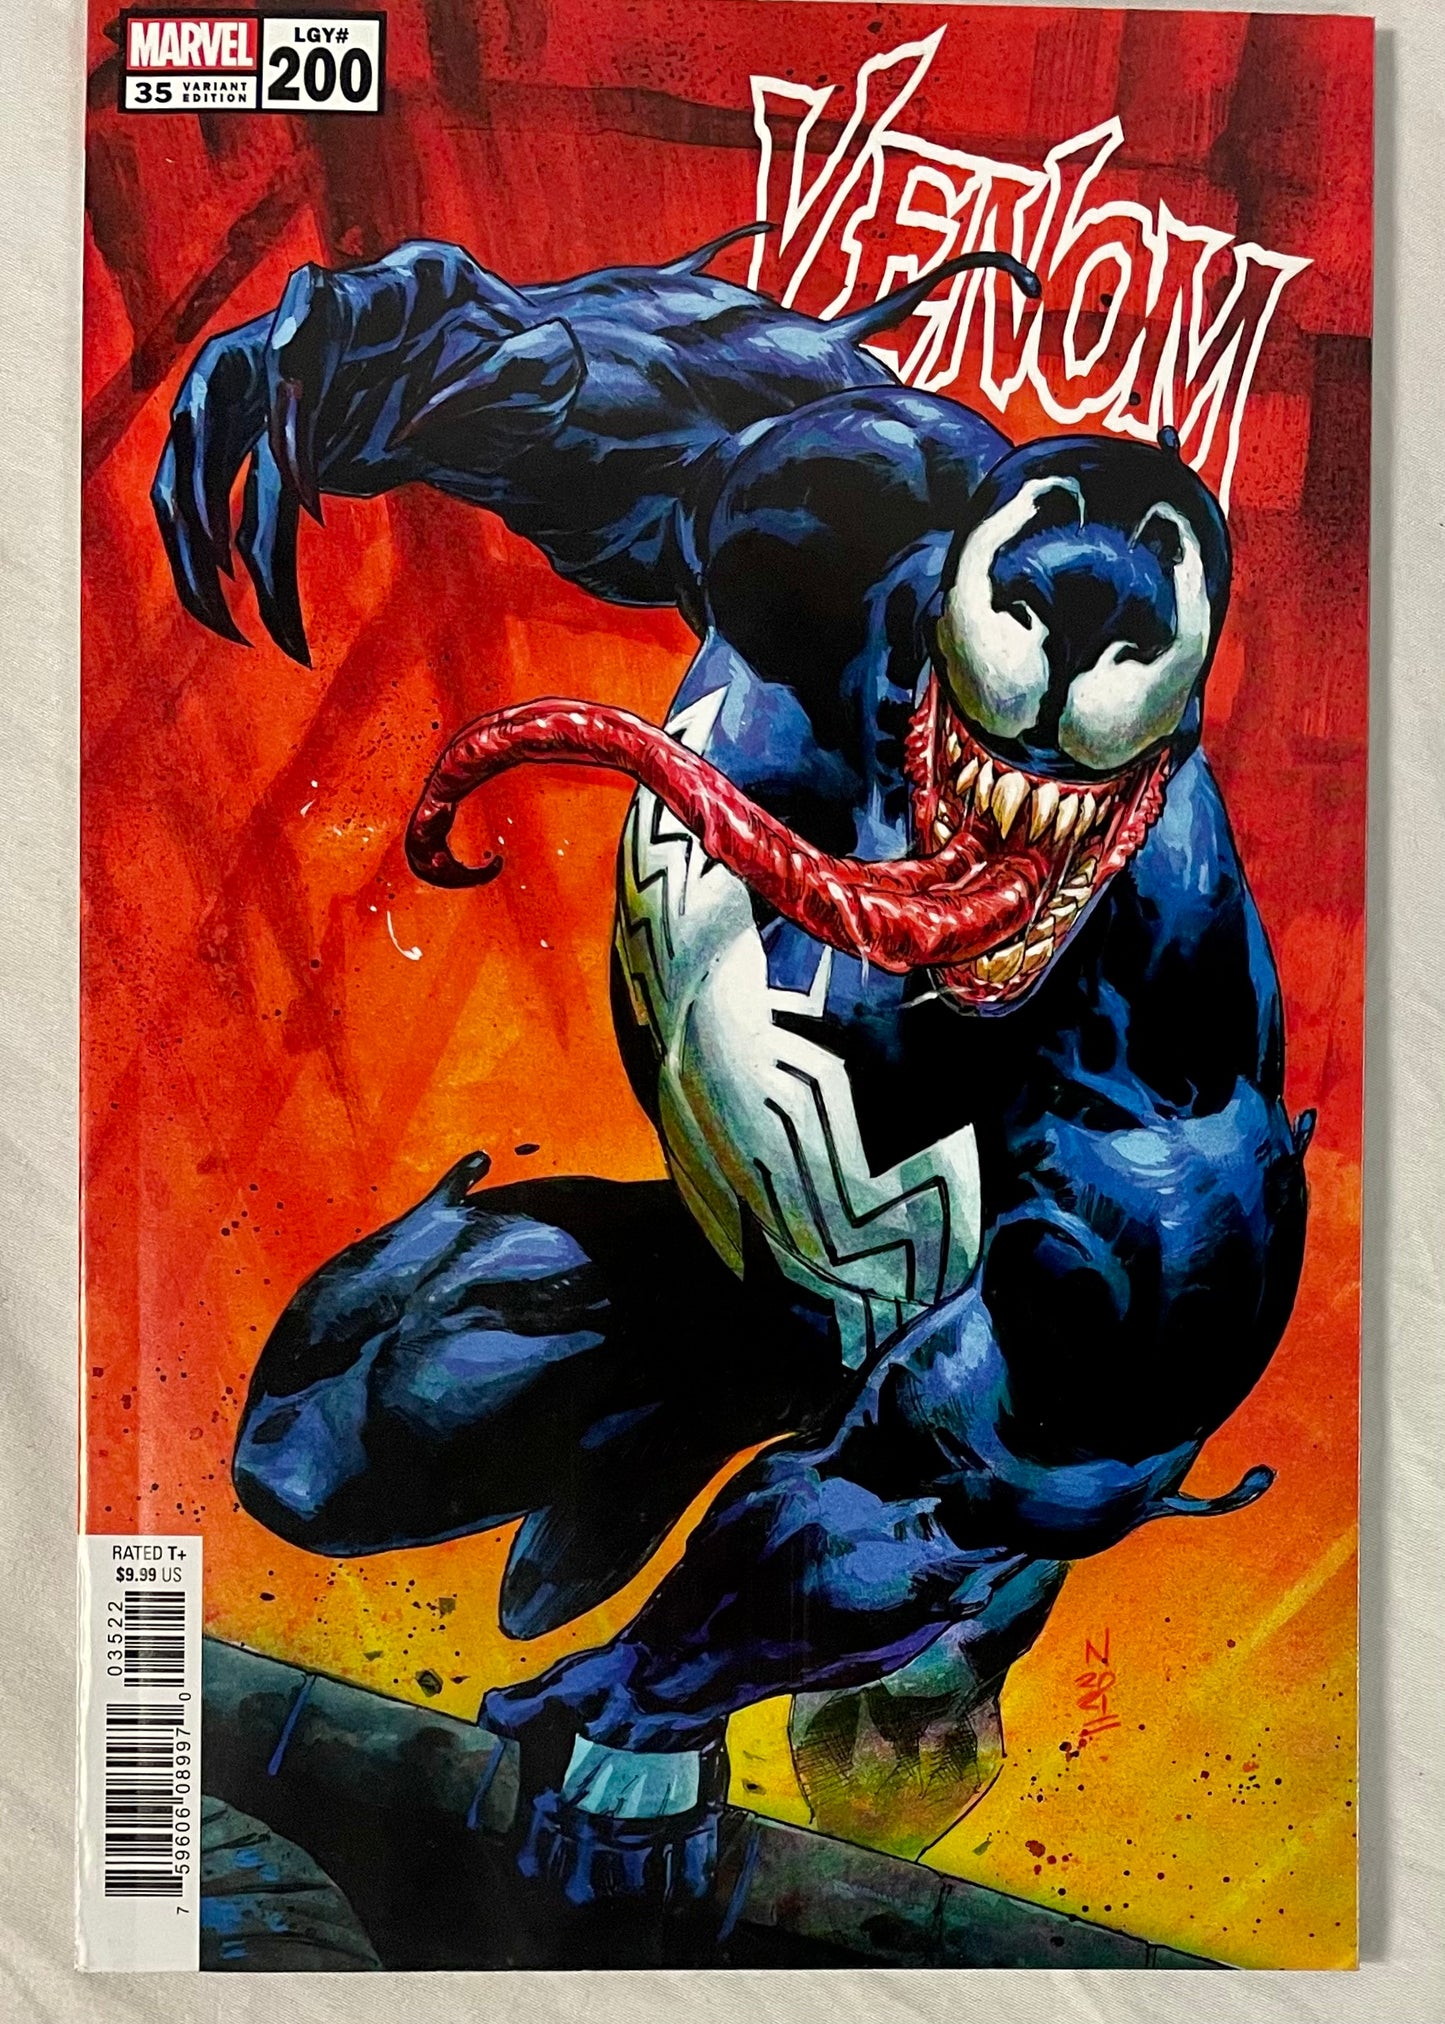 Marvel Comics Venom 35 LGY #200 Variant Edition B CVR 2nd Print